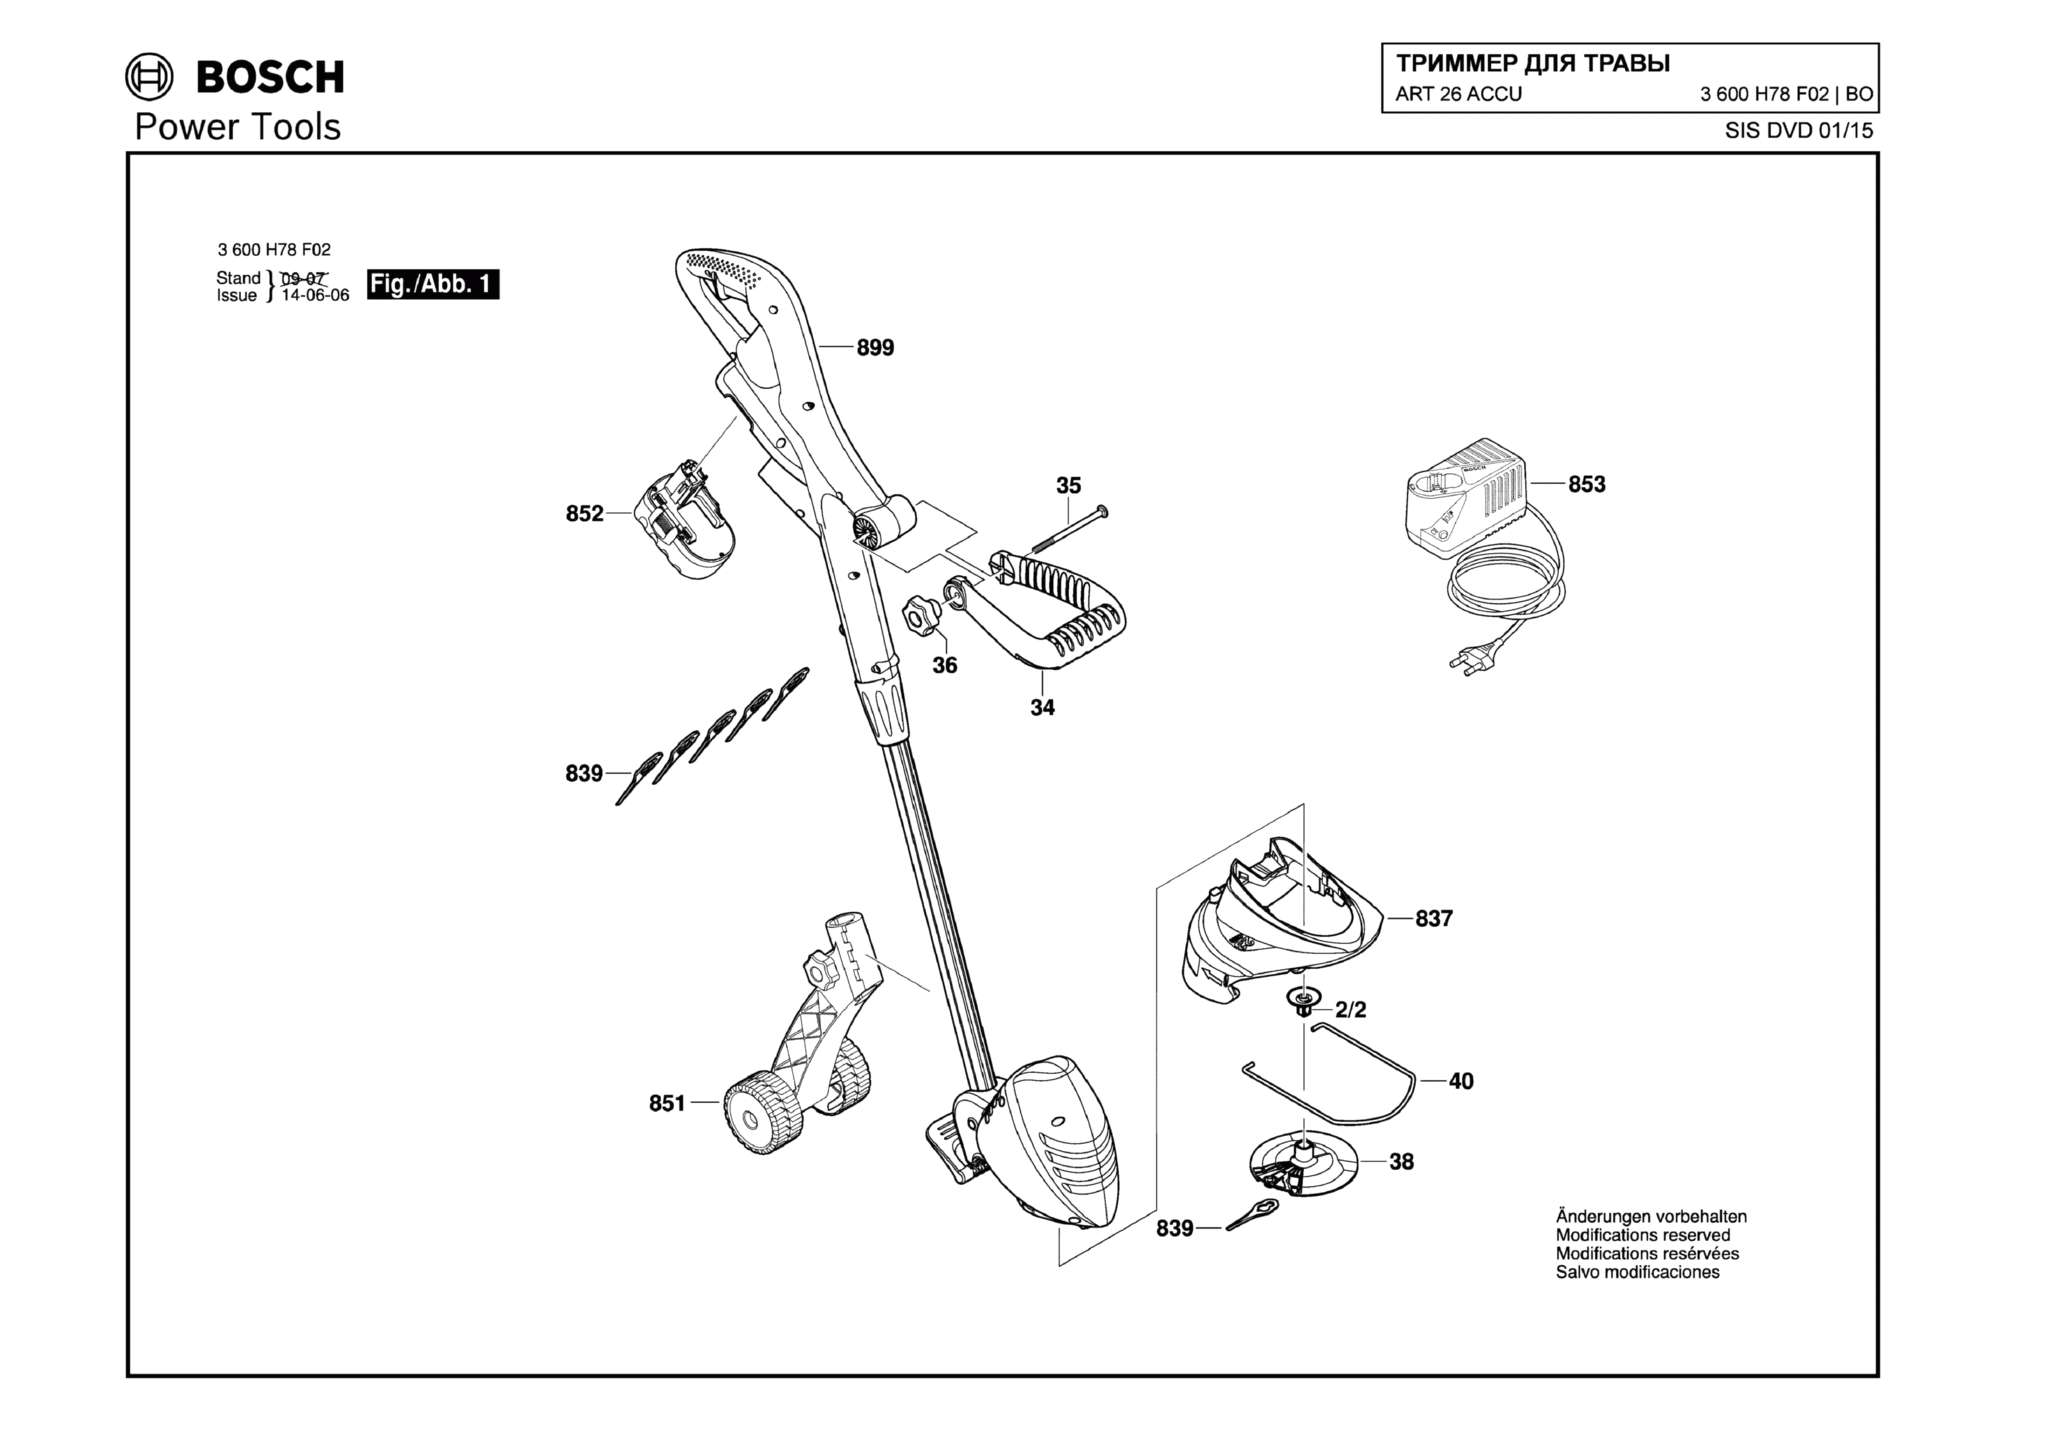 Запчасти, схема и деталировка Bosch ART 26 ACCU (ТИП 3600H78F02)